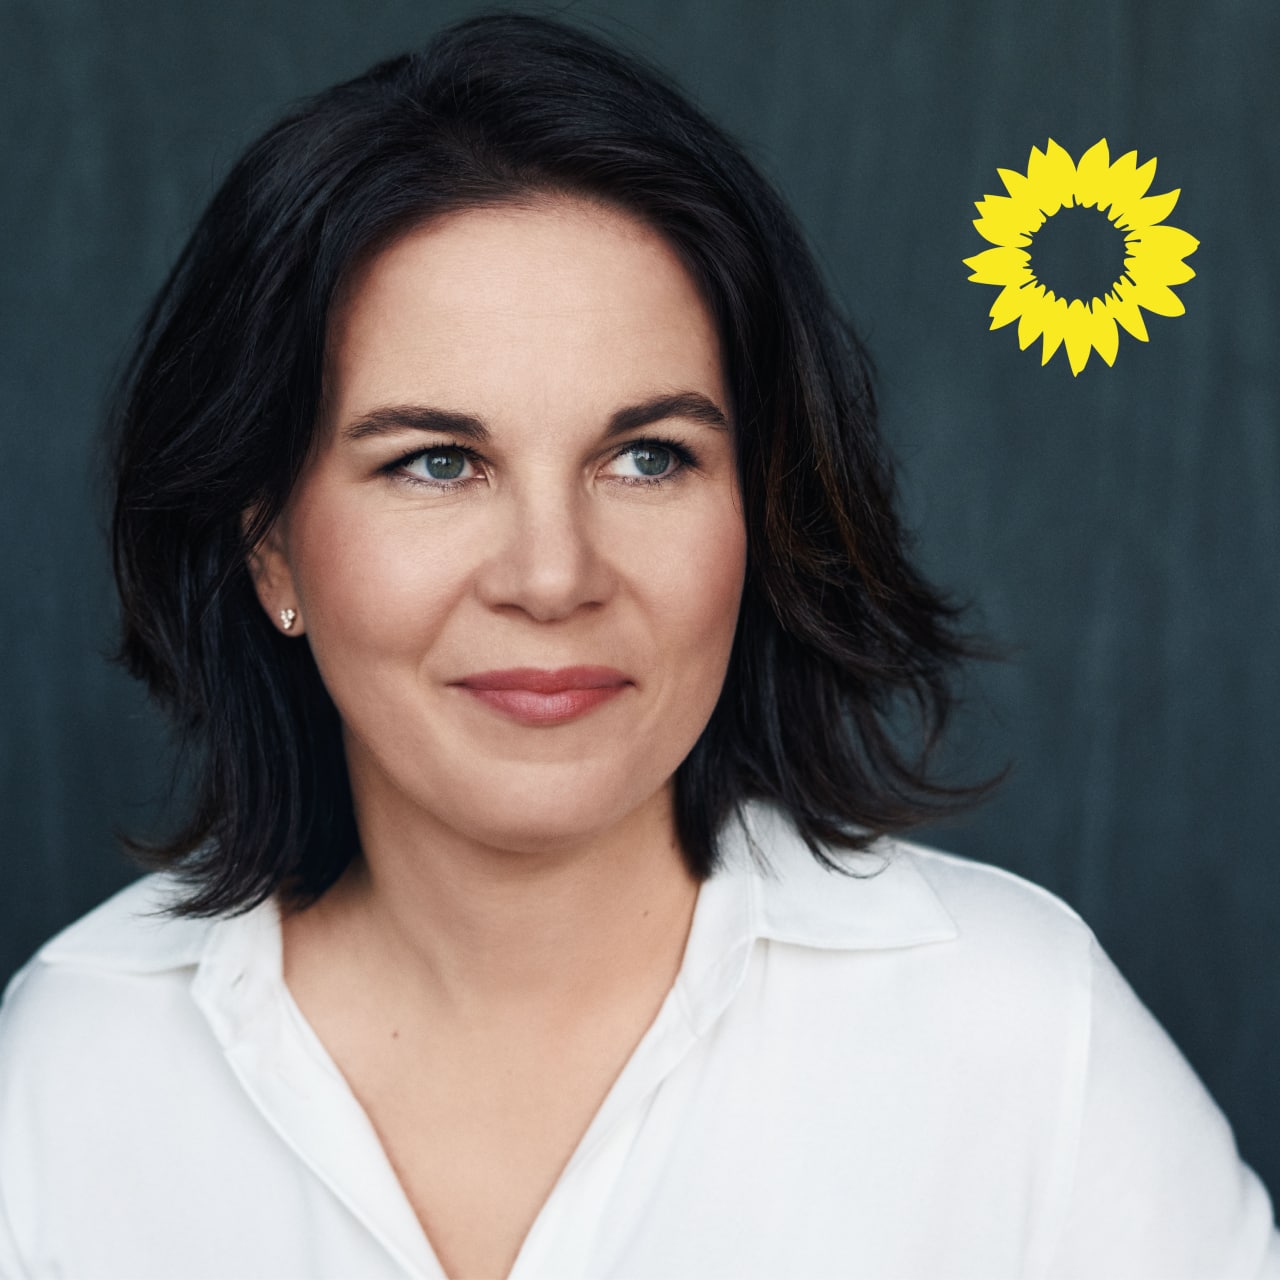 Annalena Baerbock: Erste Grüne Kanzlerkandidatin